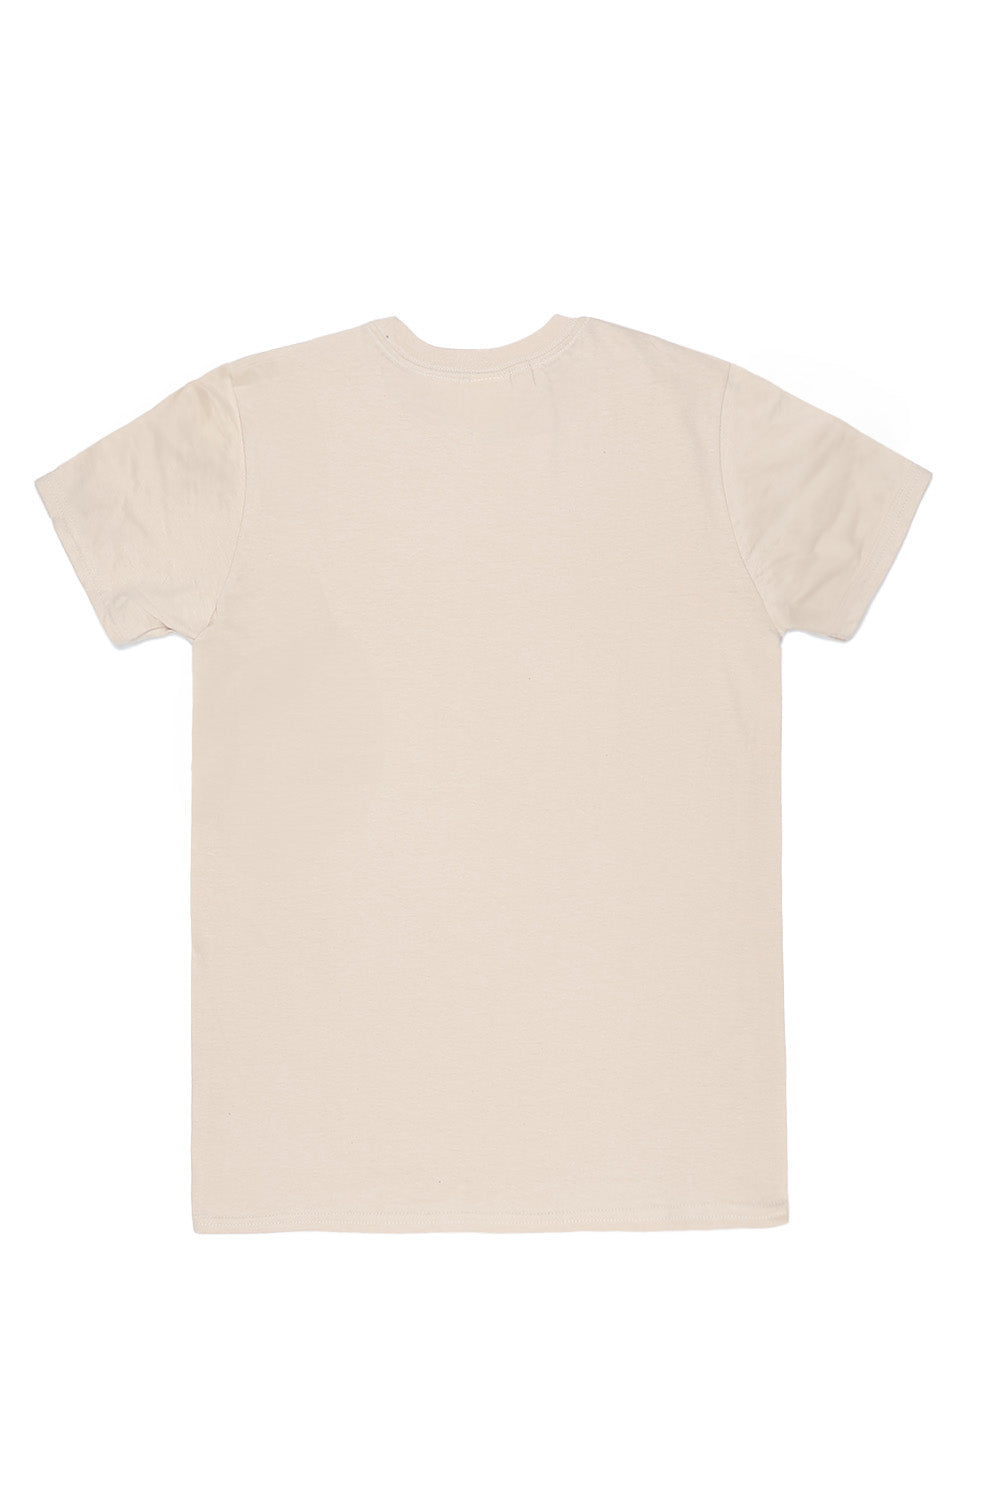 Los Angeles T-Shirt in Sand (Custom Packs)